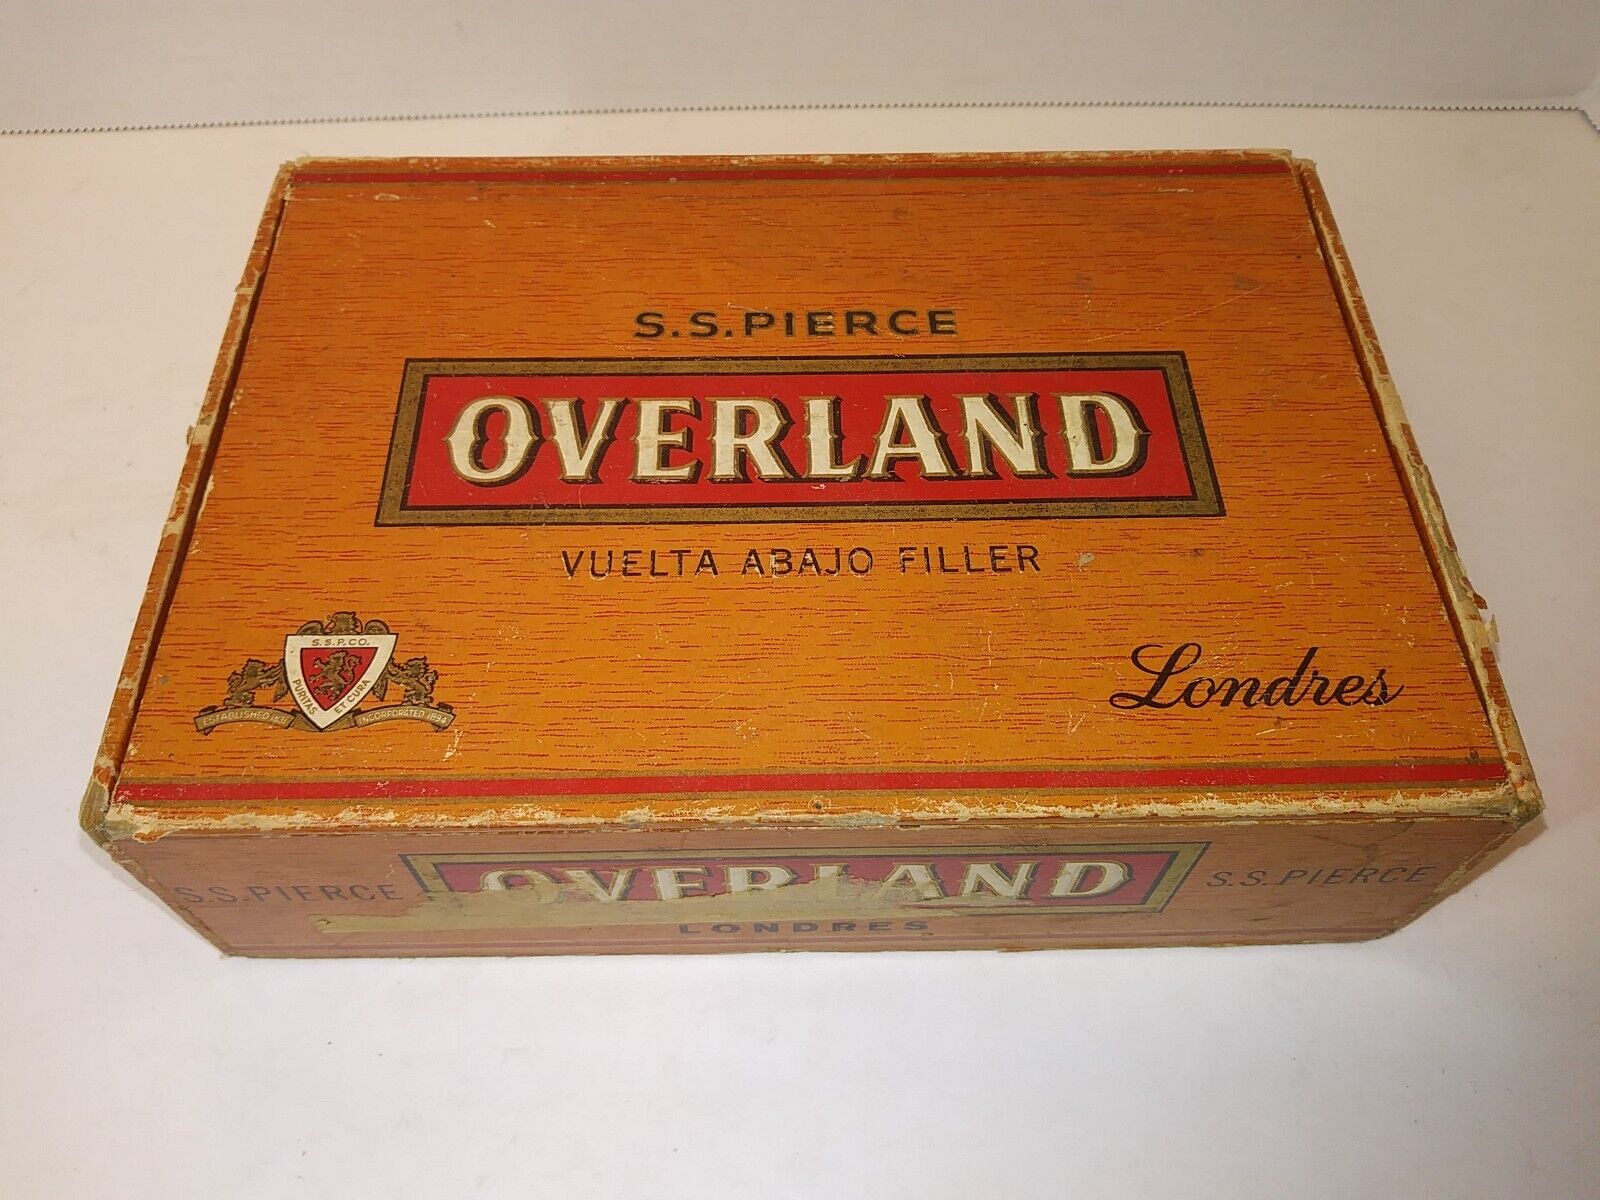 Vintage OVERLAND Vuelta A3AJO FIller Londres Cigar Box S.S. Pierce Boston Mass.